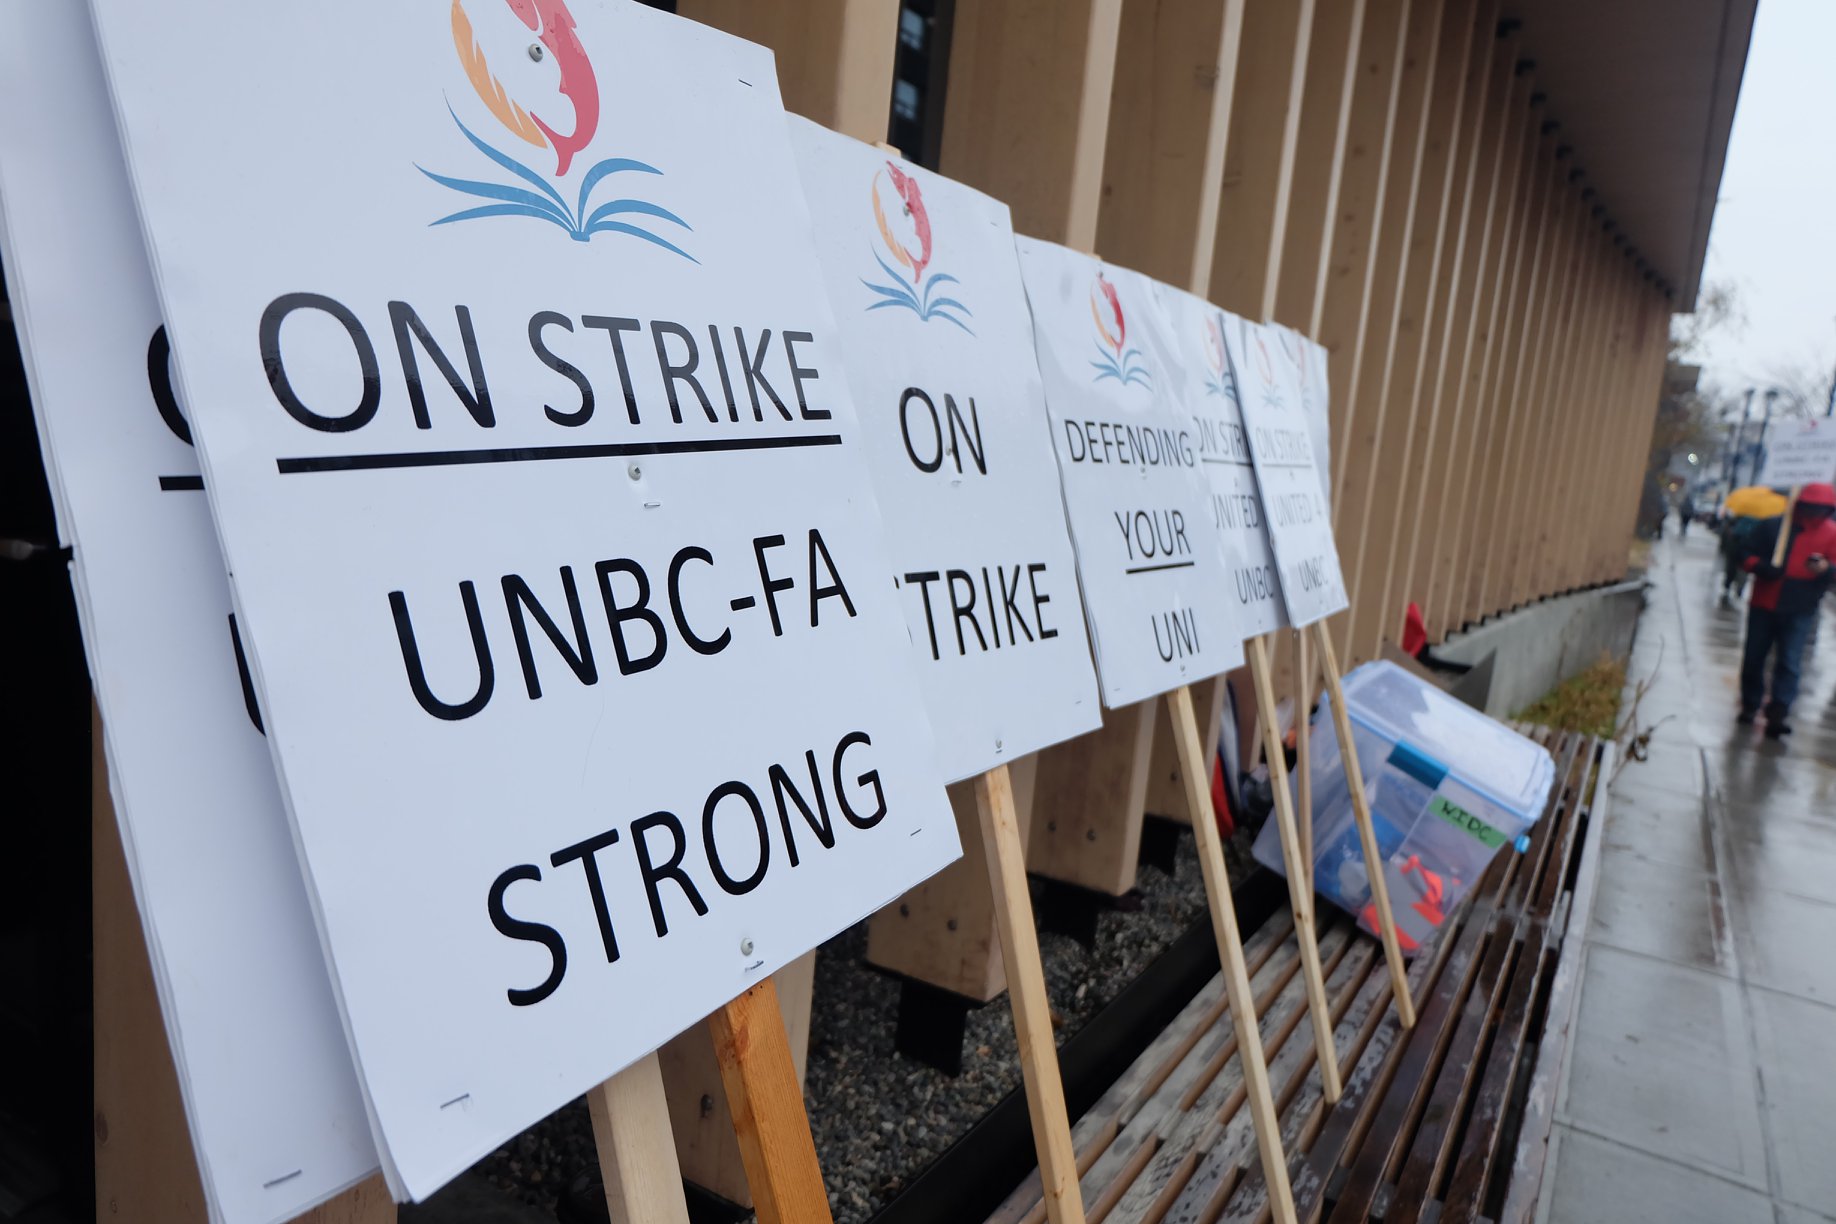 UNBC strike signs